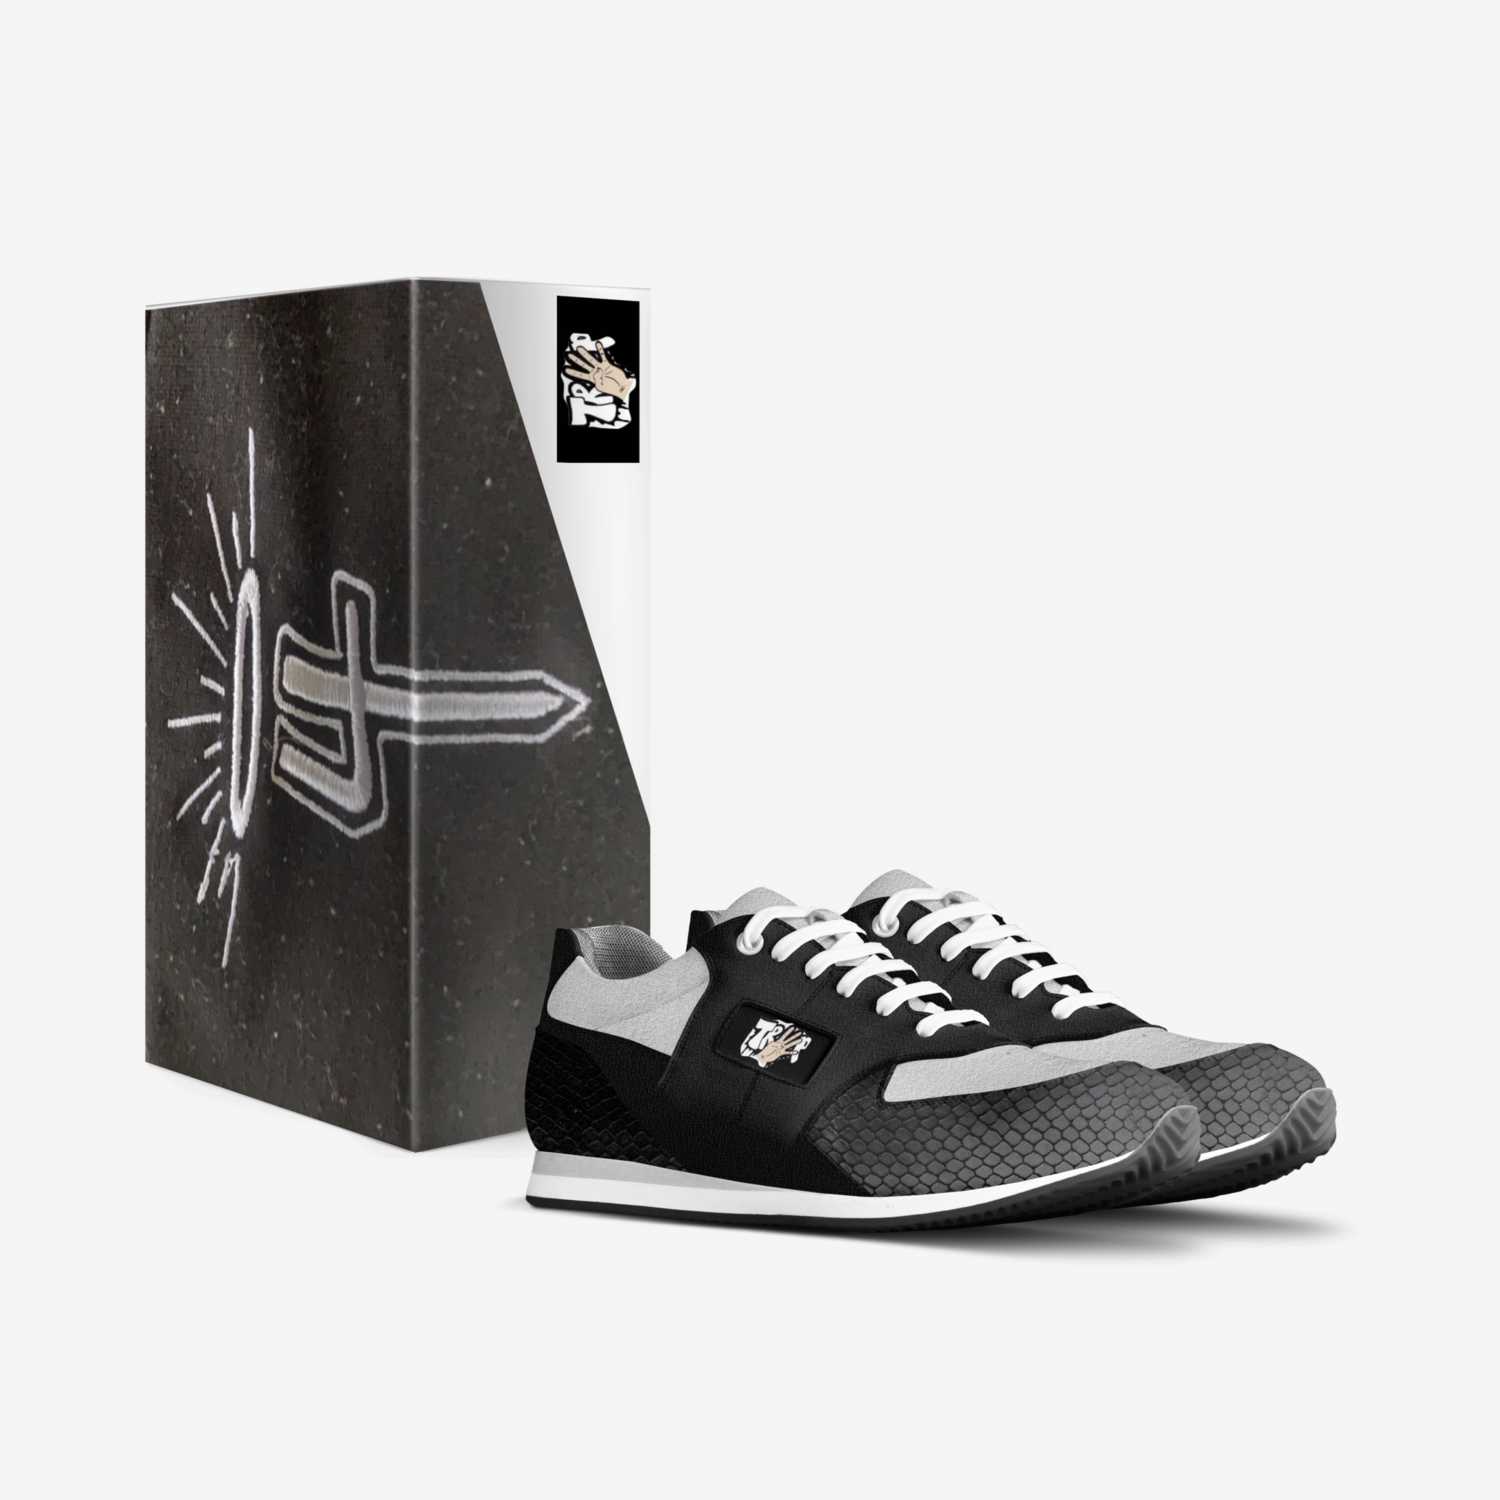 Tr4p g ''MOB ties'' custom made in Italy shoes by Jamez Netan El | Box view